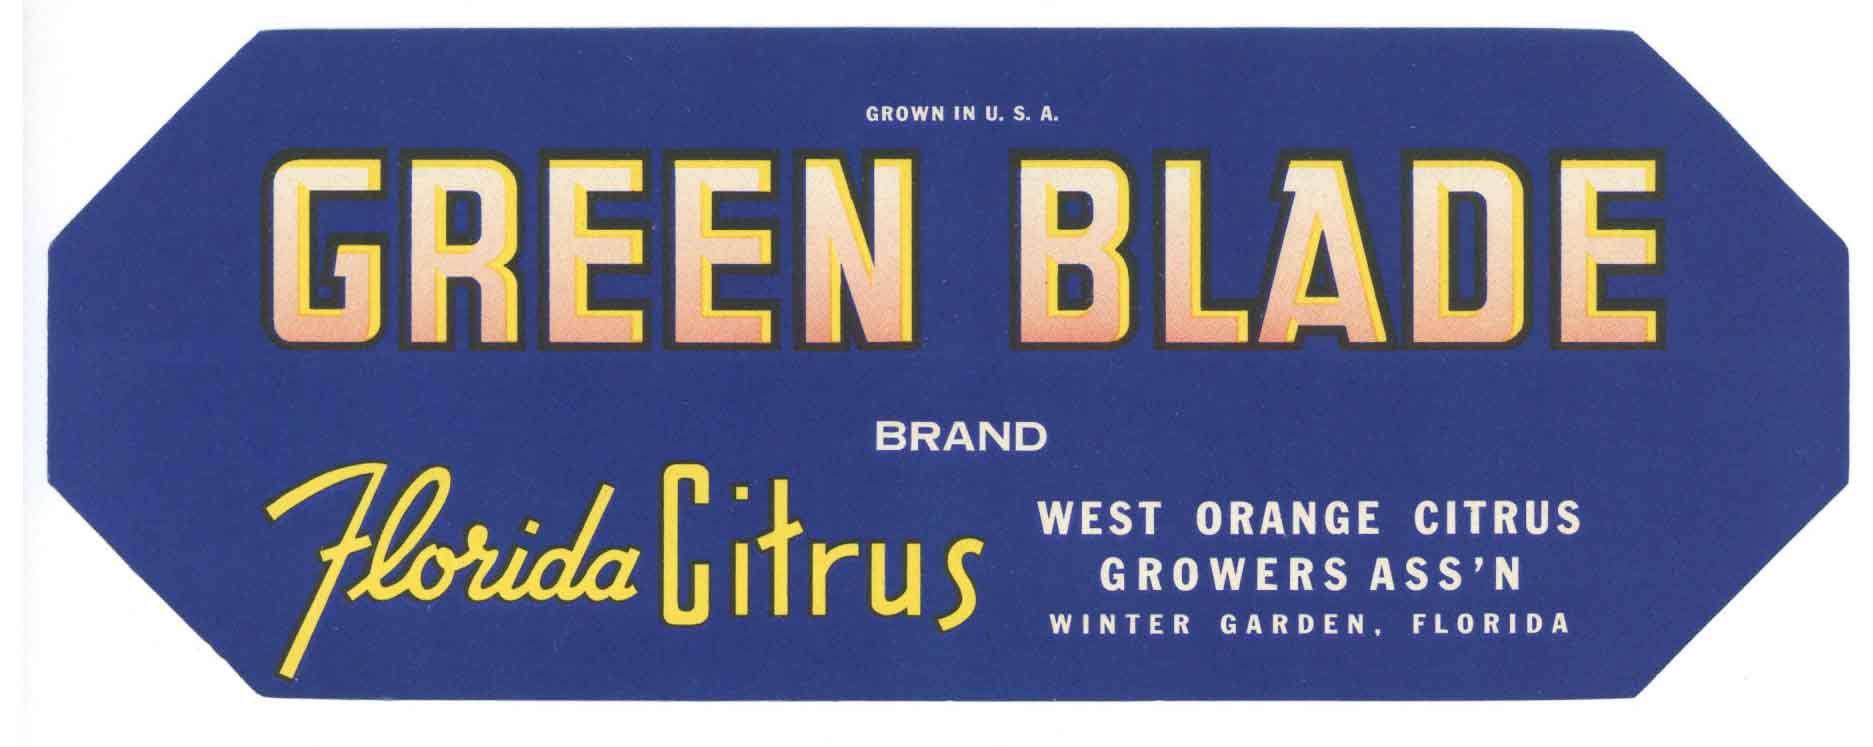 Green Blade Brand Vintage Winter Garden Florida Citrus Crate Label